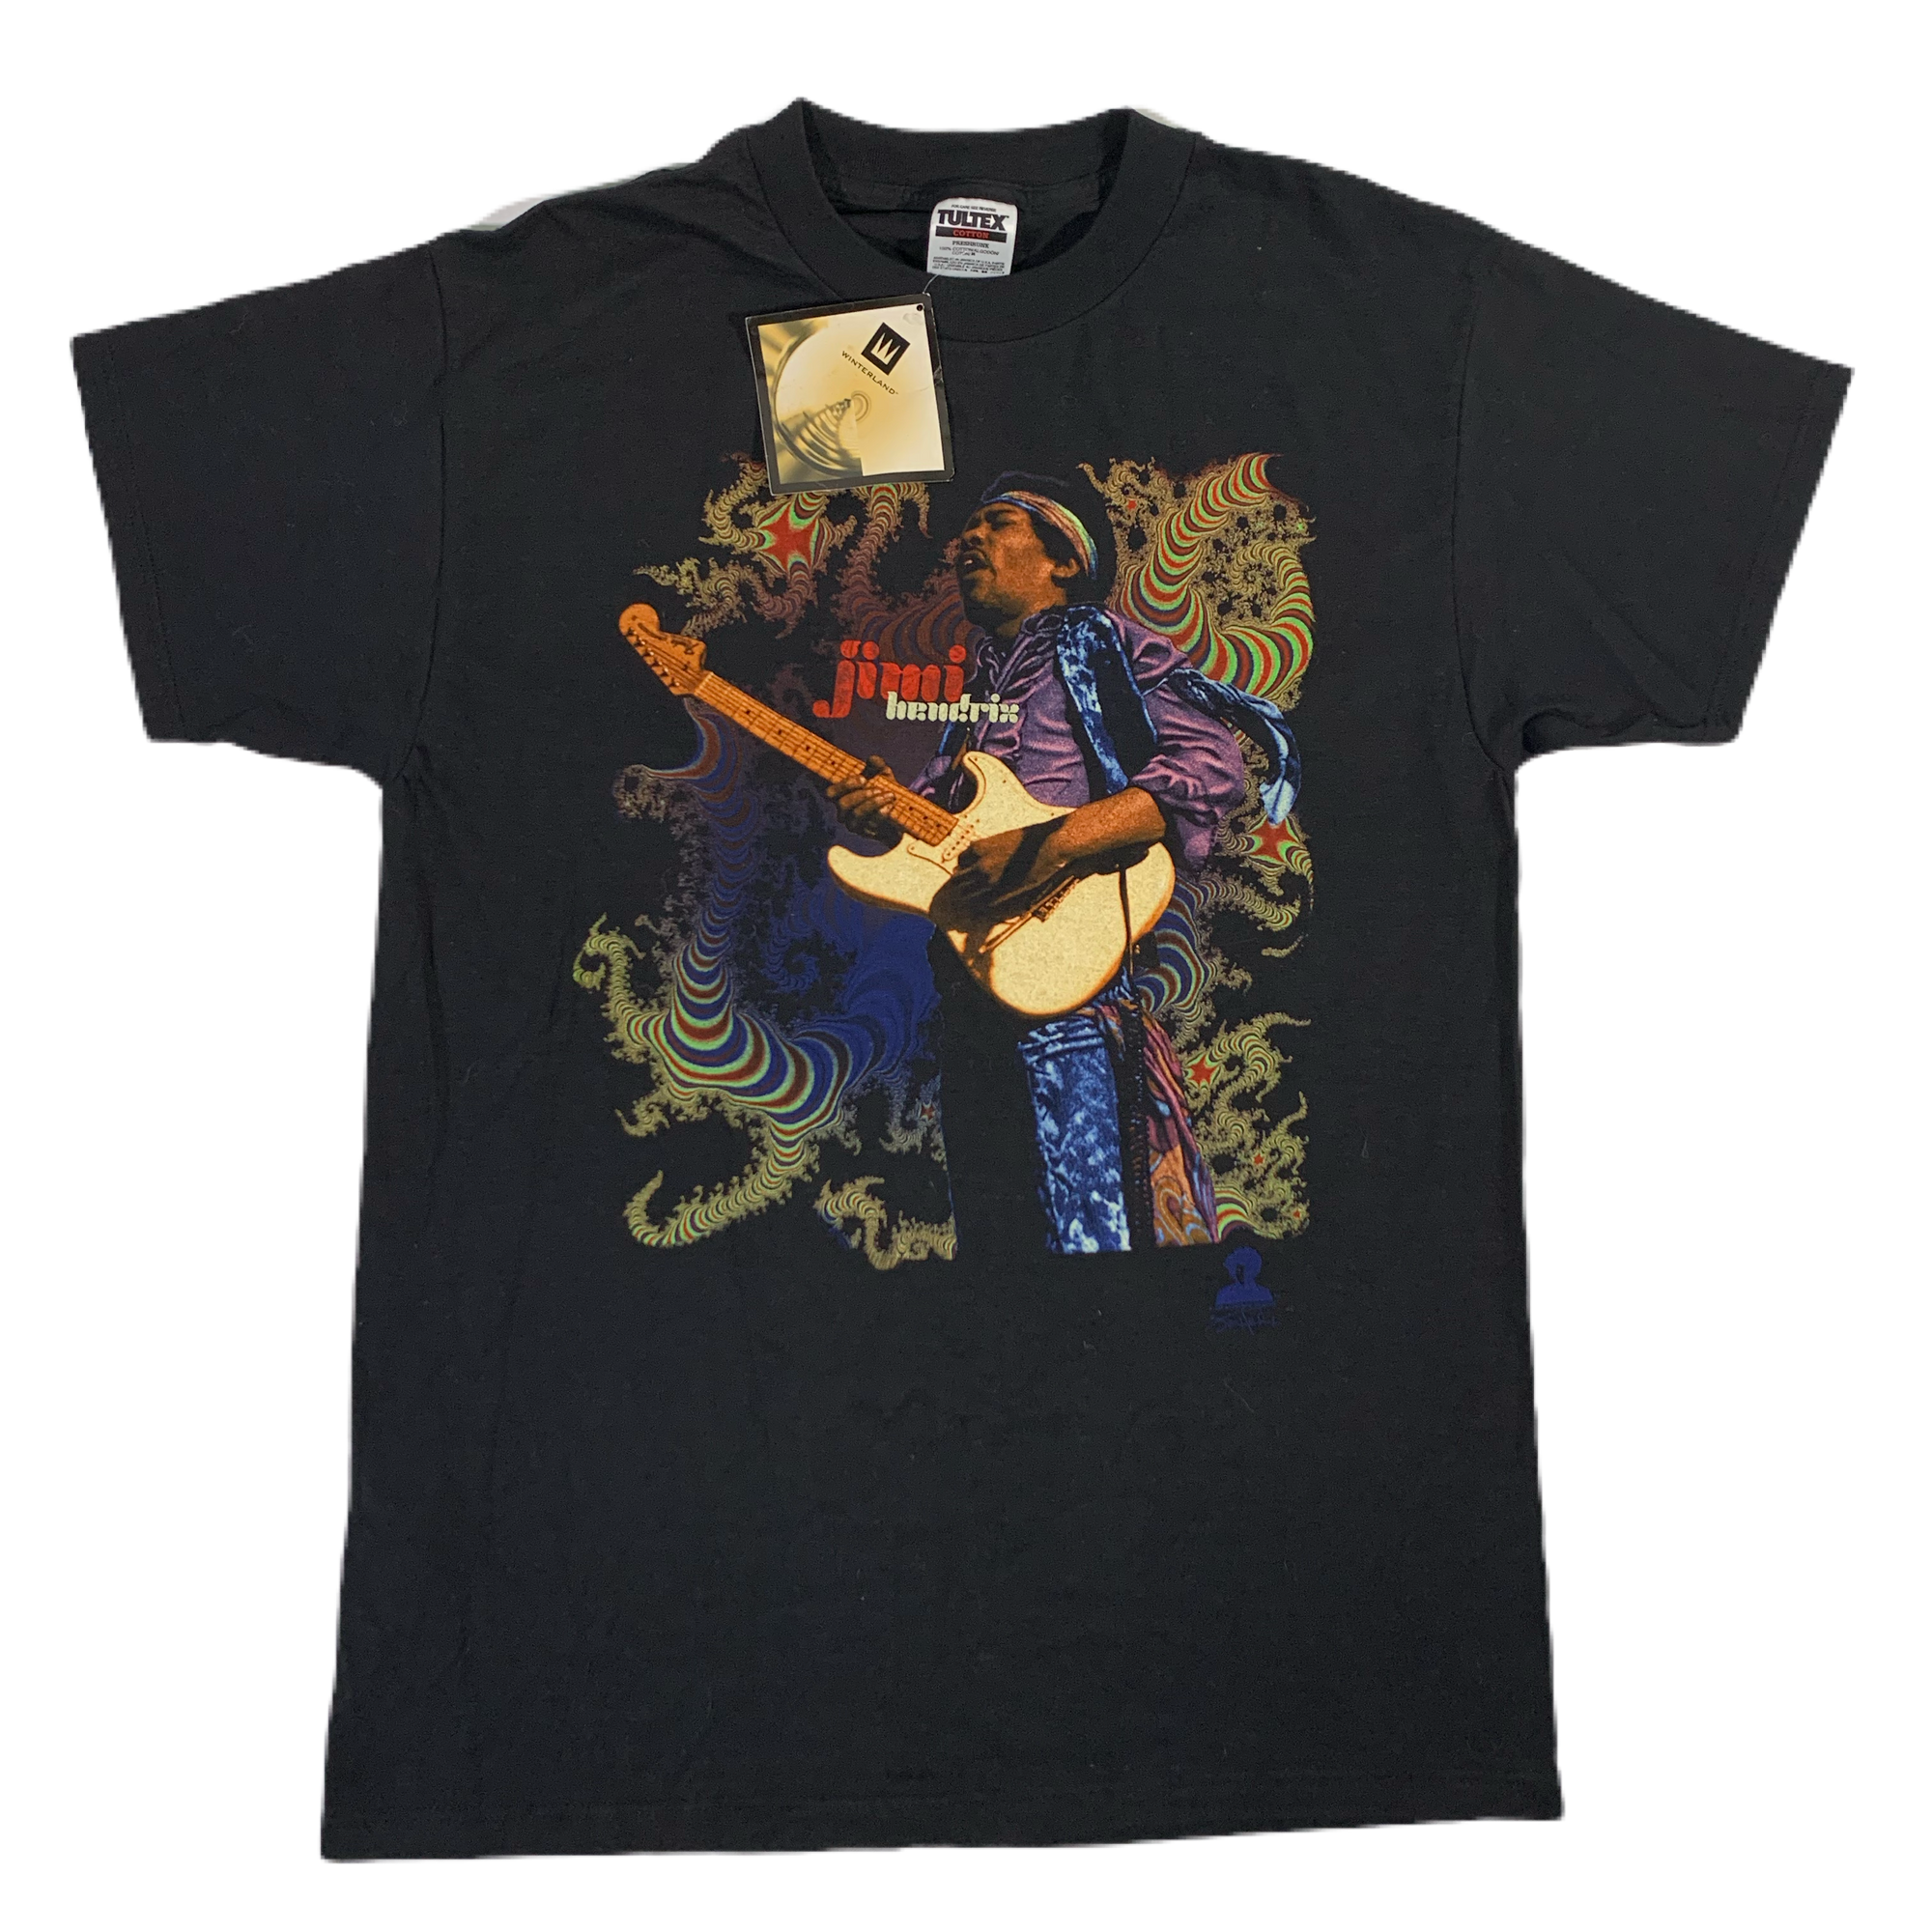 Vintage Jimi Hendrix "1989" T-Shirt - jointcustodydc